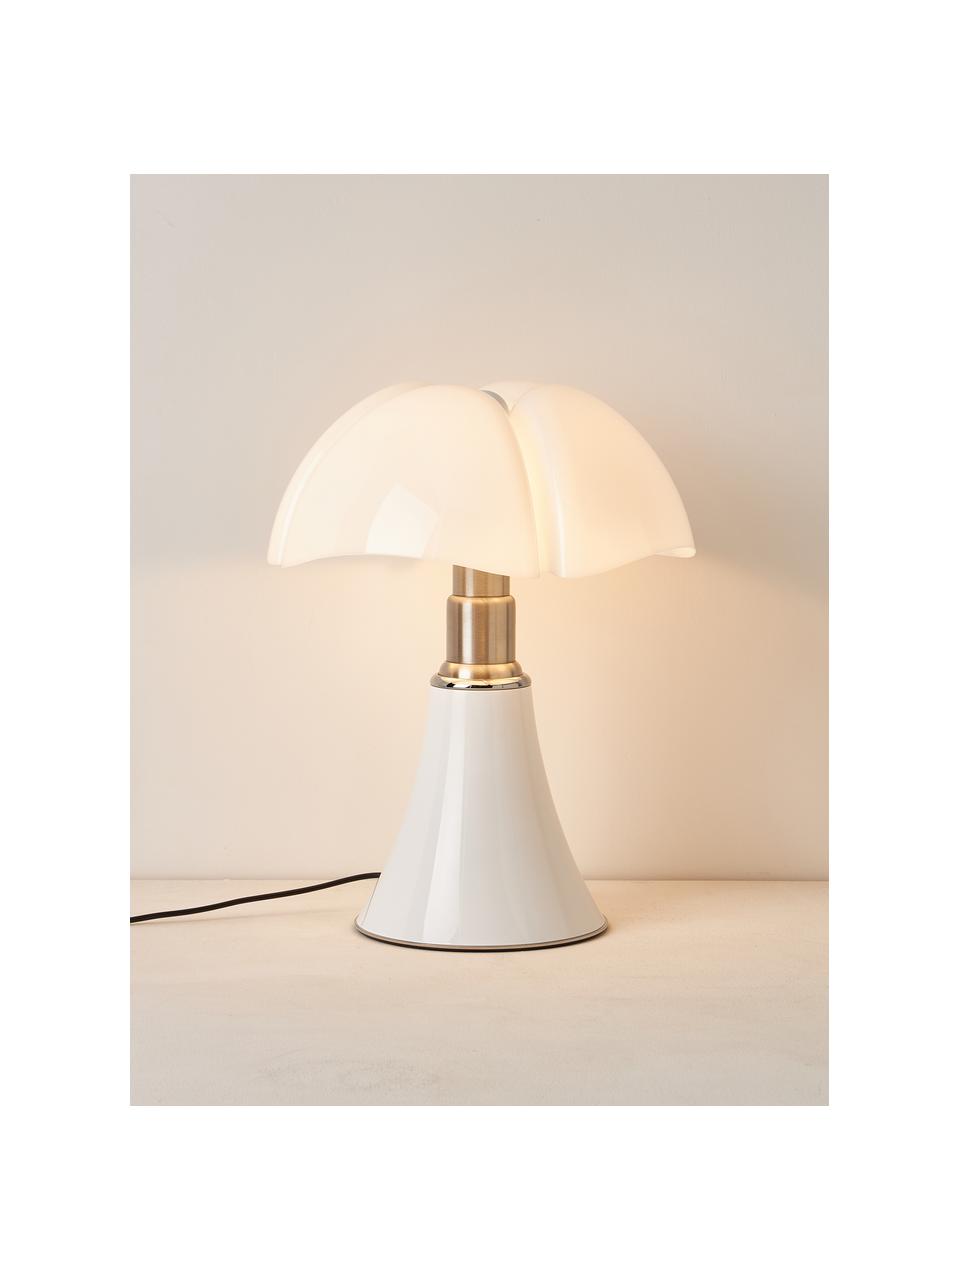 Lámpara de mesa grande LED regualble Pipistrello, altura regulable, Estructura: metal, aluminio pintado, Blanco brillante, Ø 40 x Al 50-62 cm